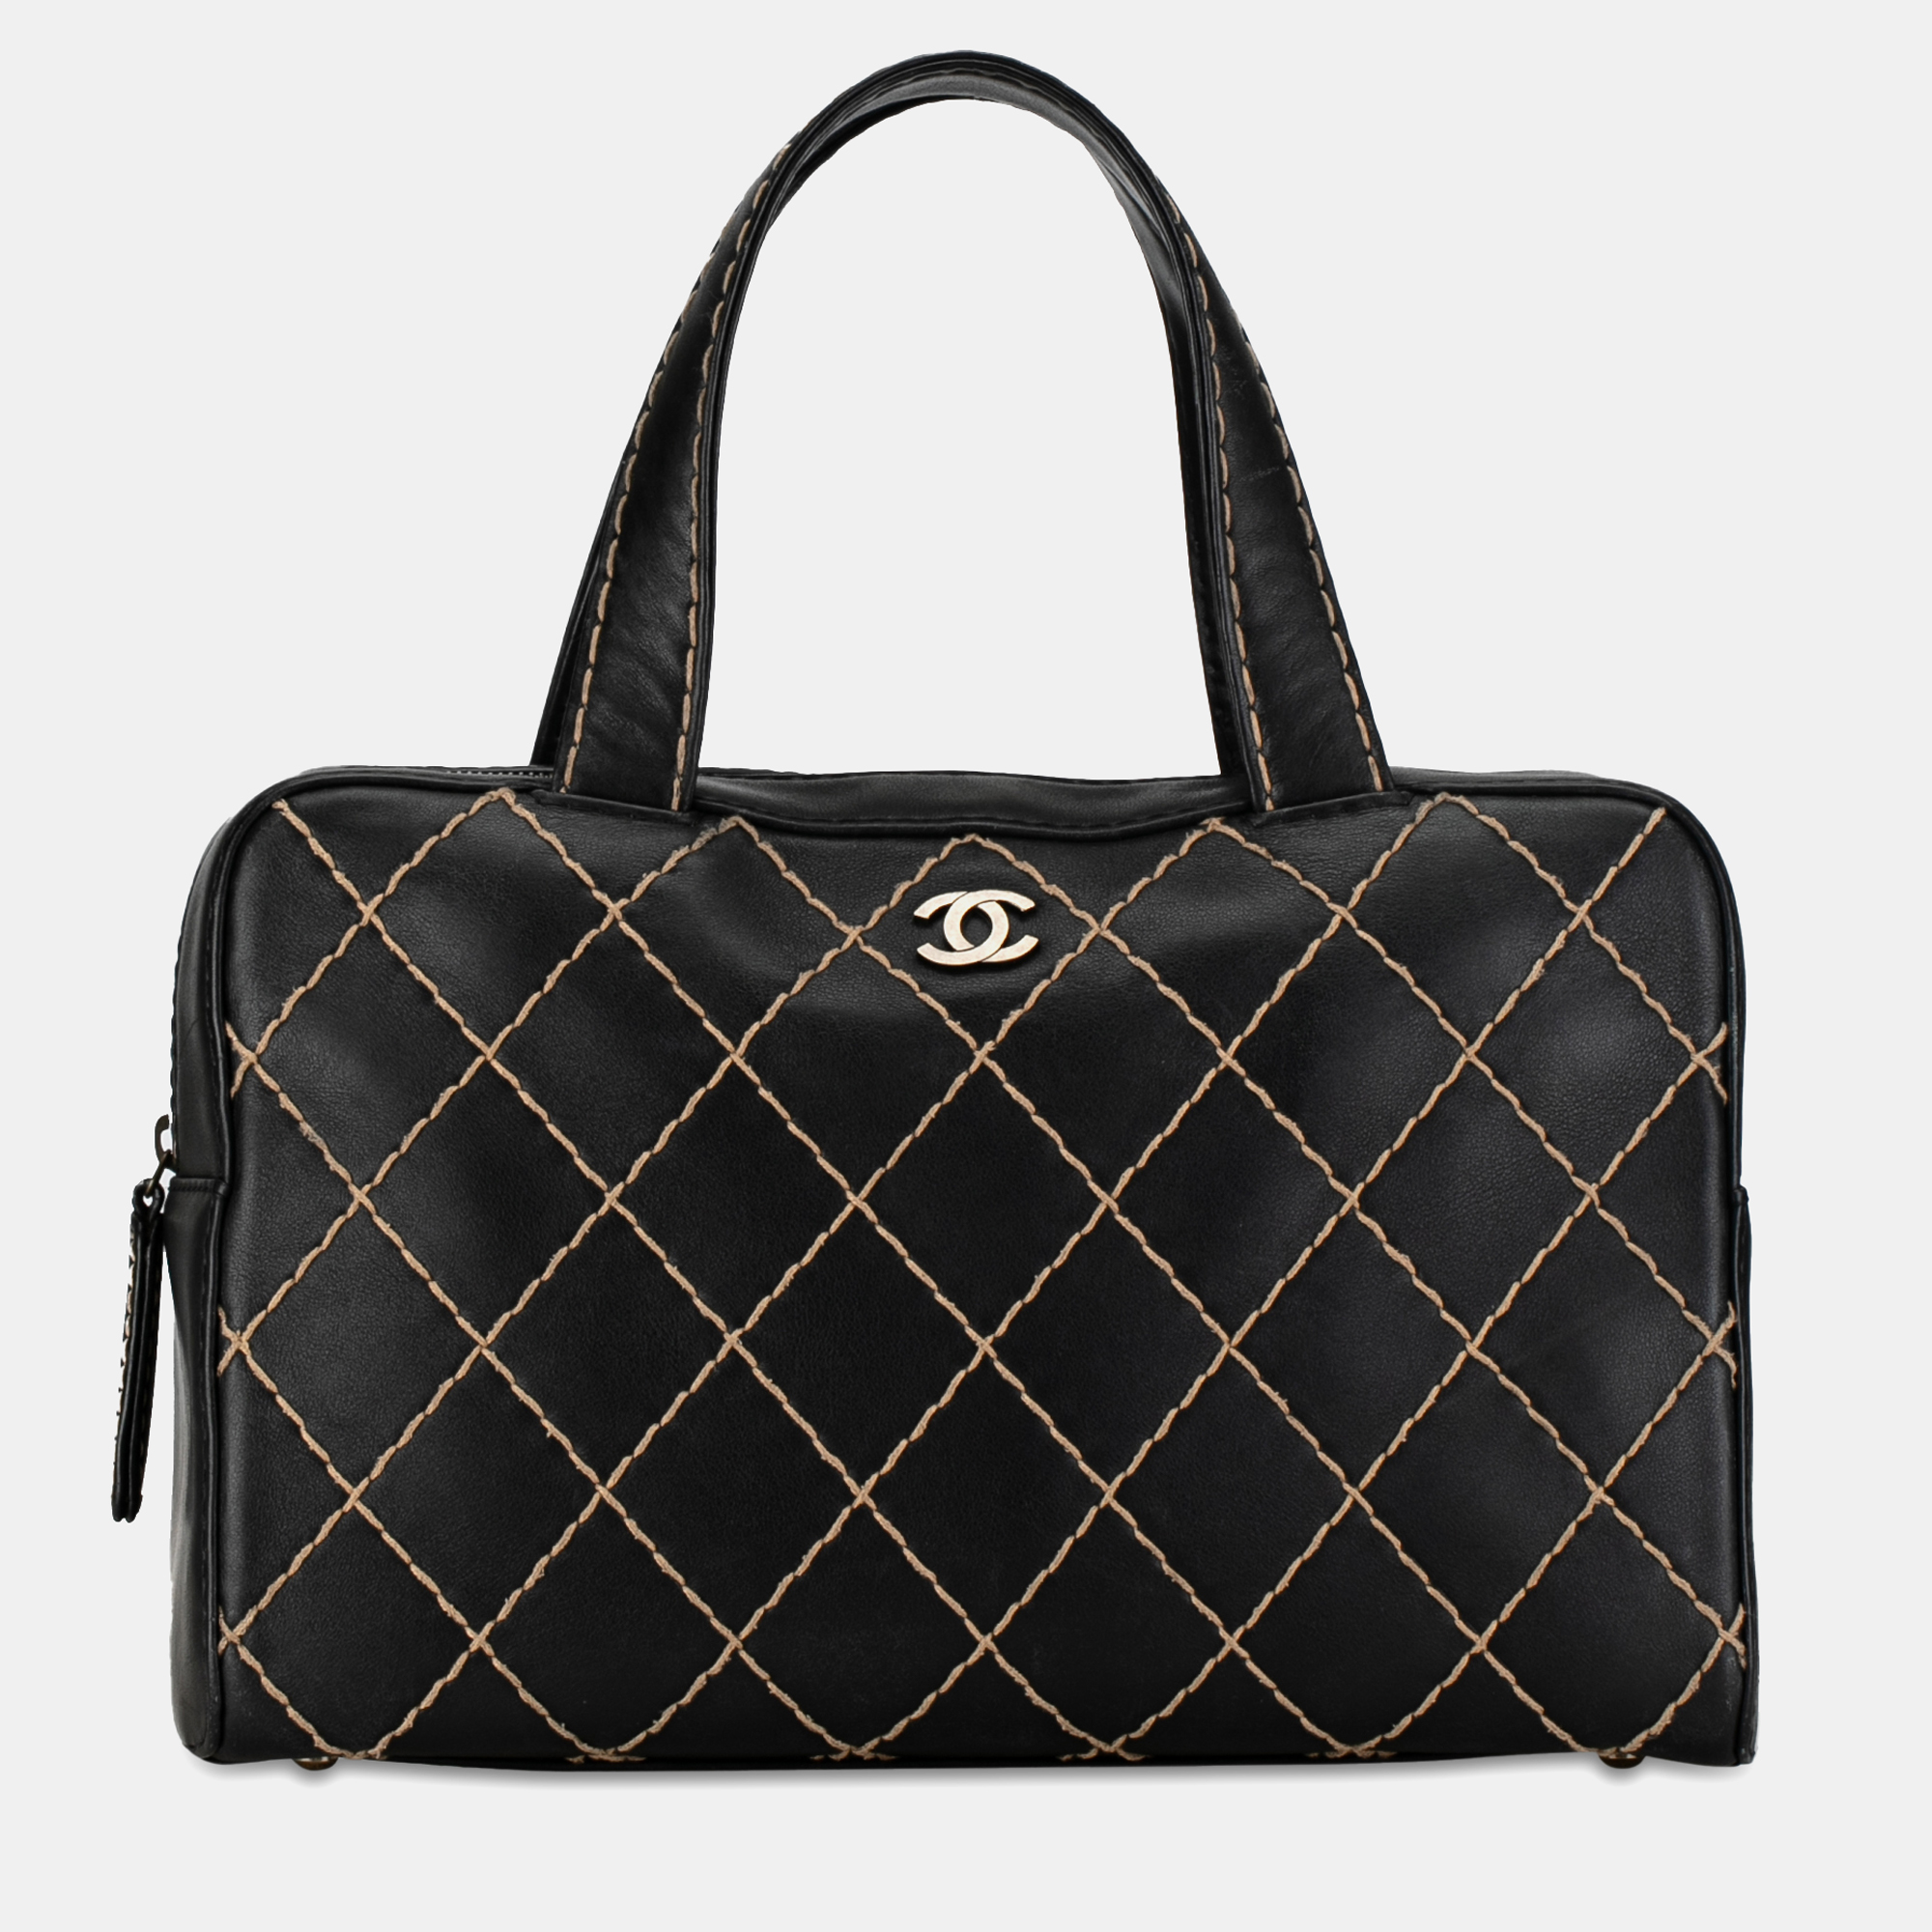 Chanel cc wild stitch lambskin handbag